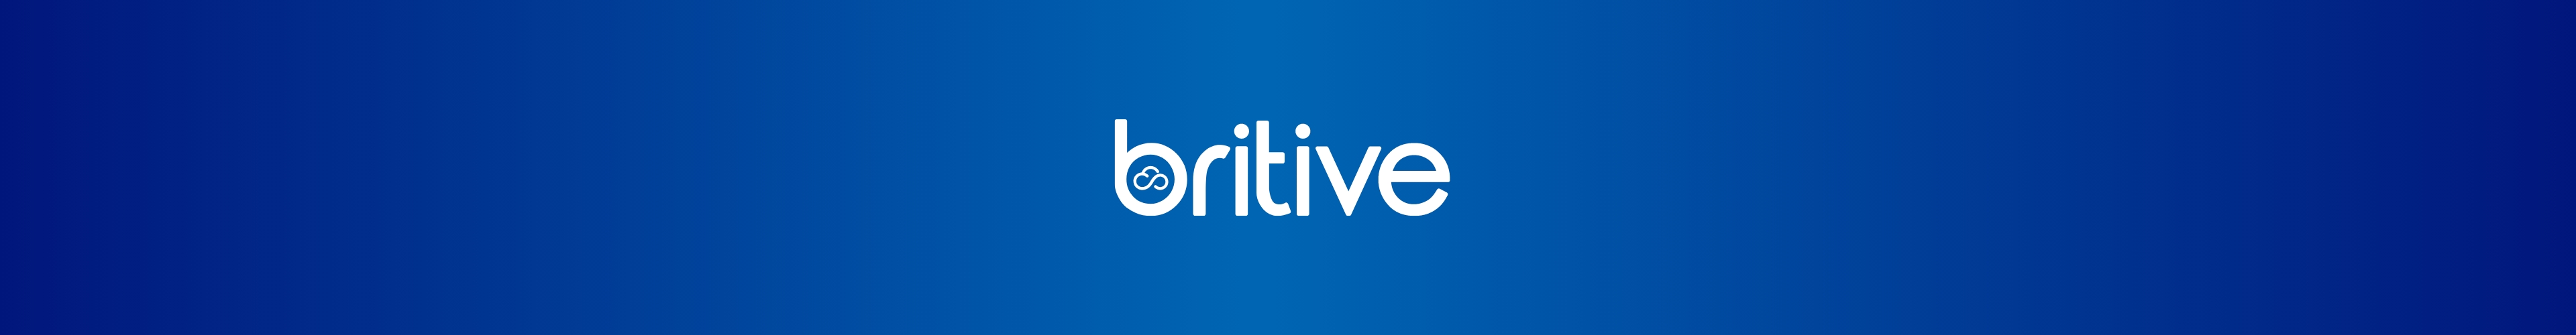 Britive-Logo-Footer